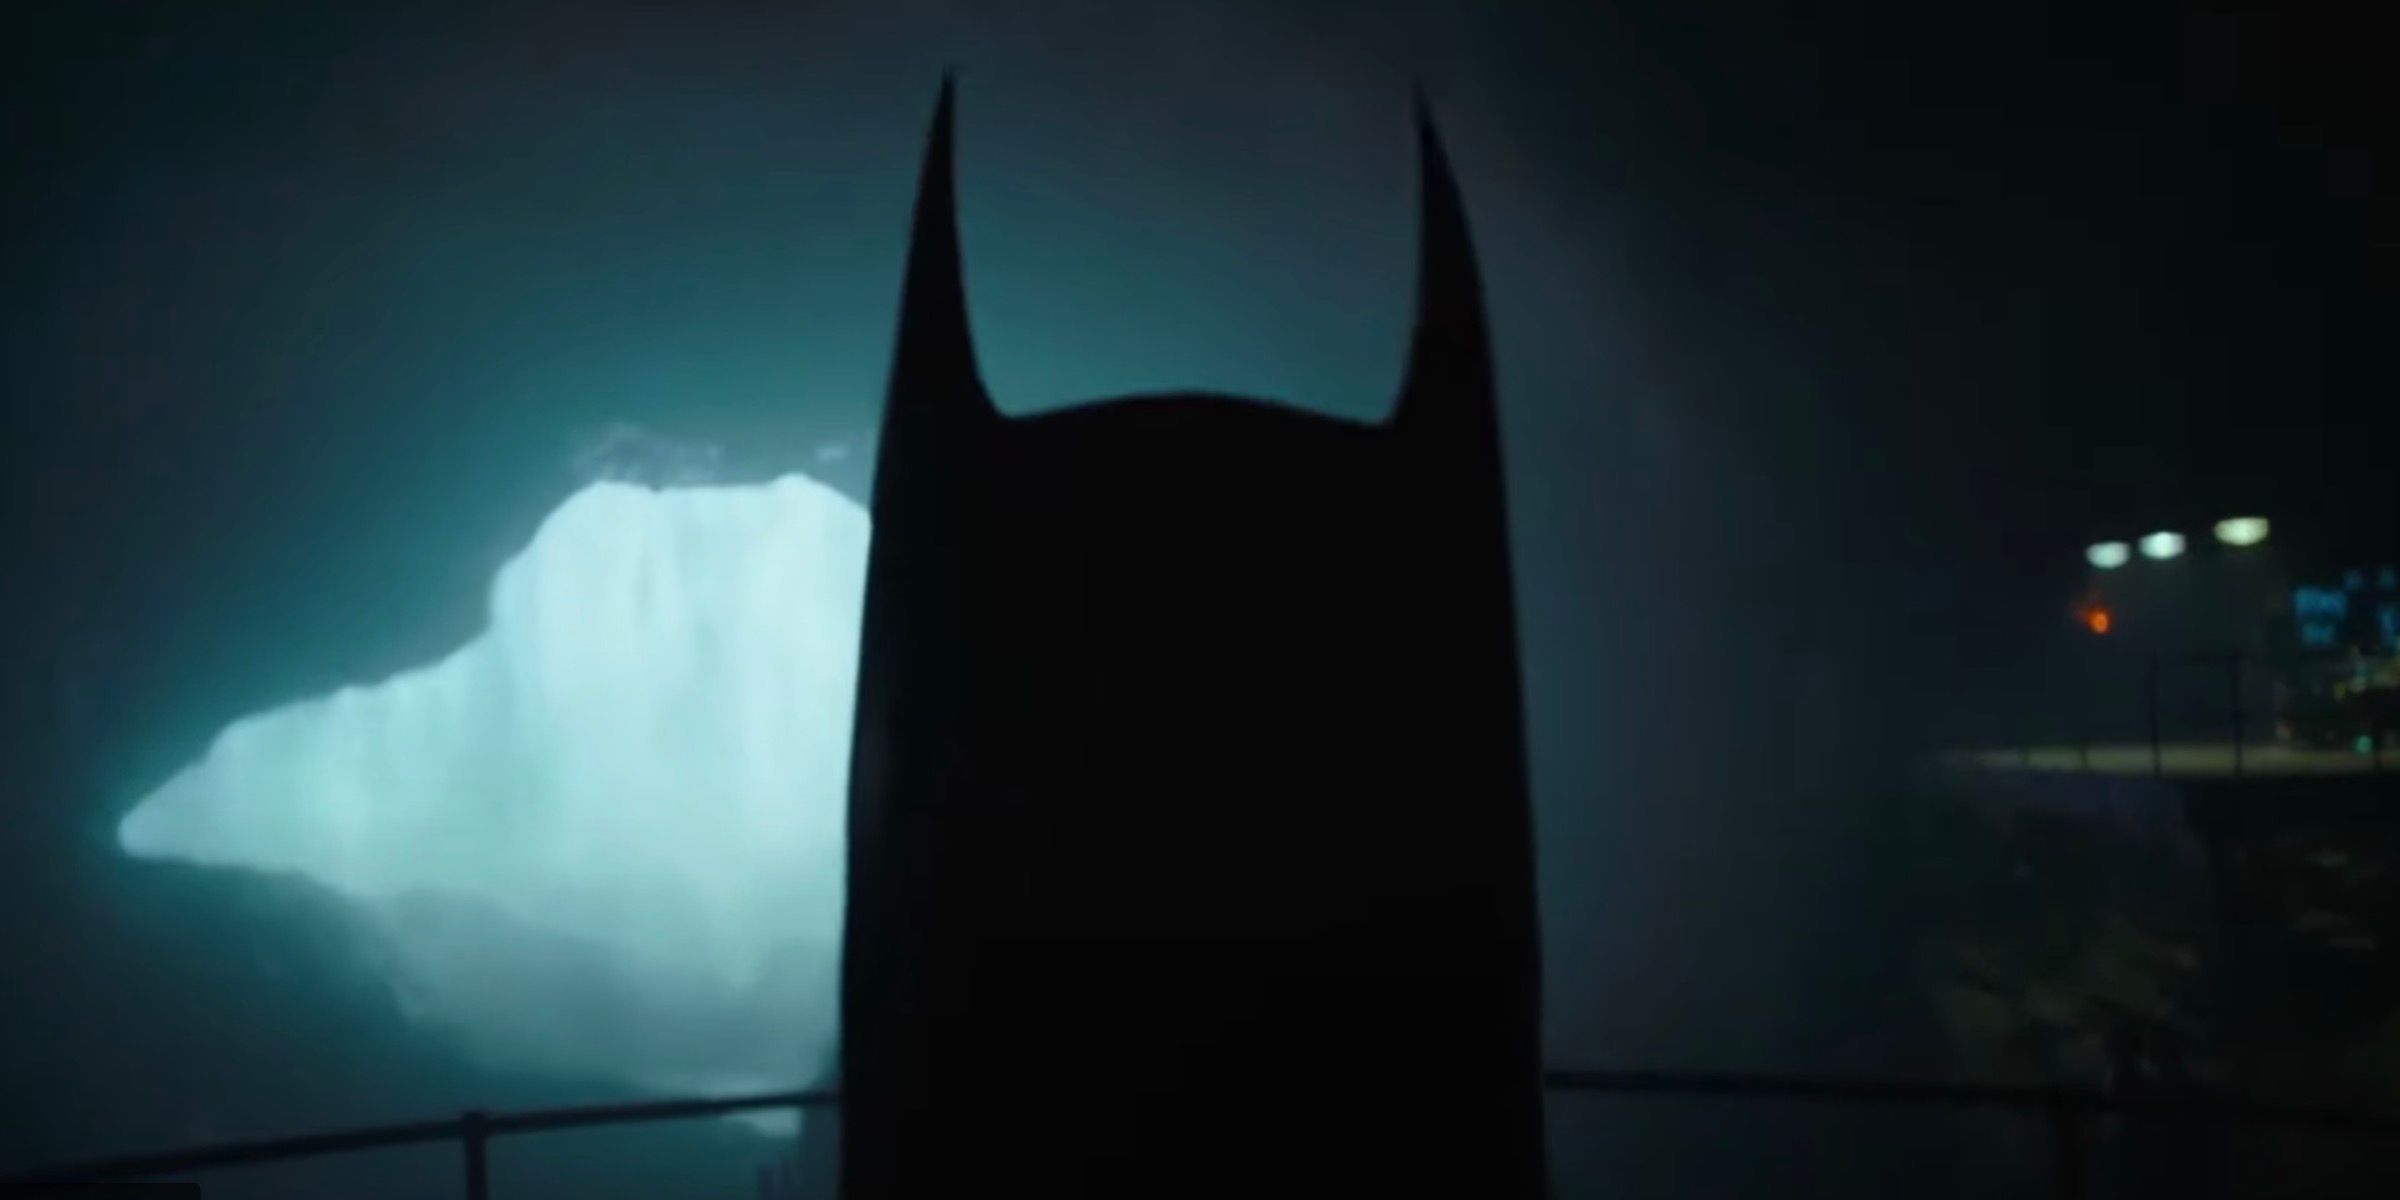 keaton batman in the flash teaser